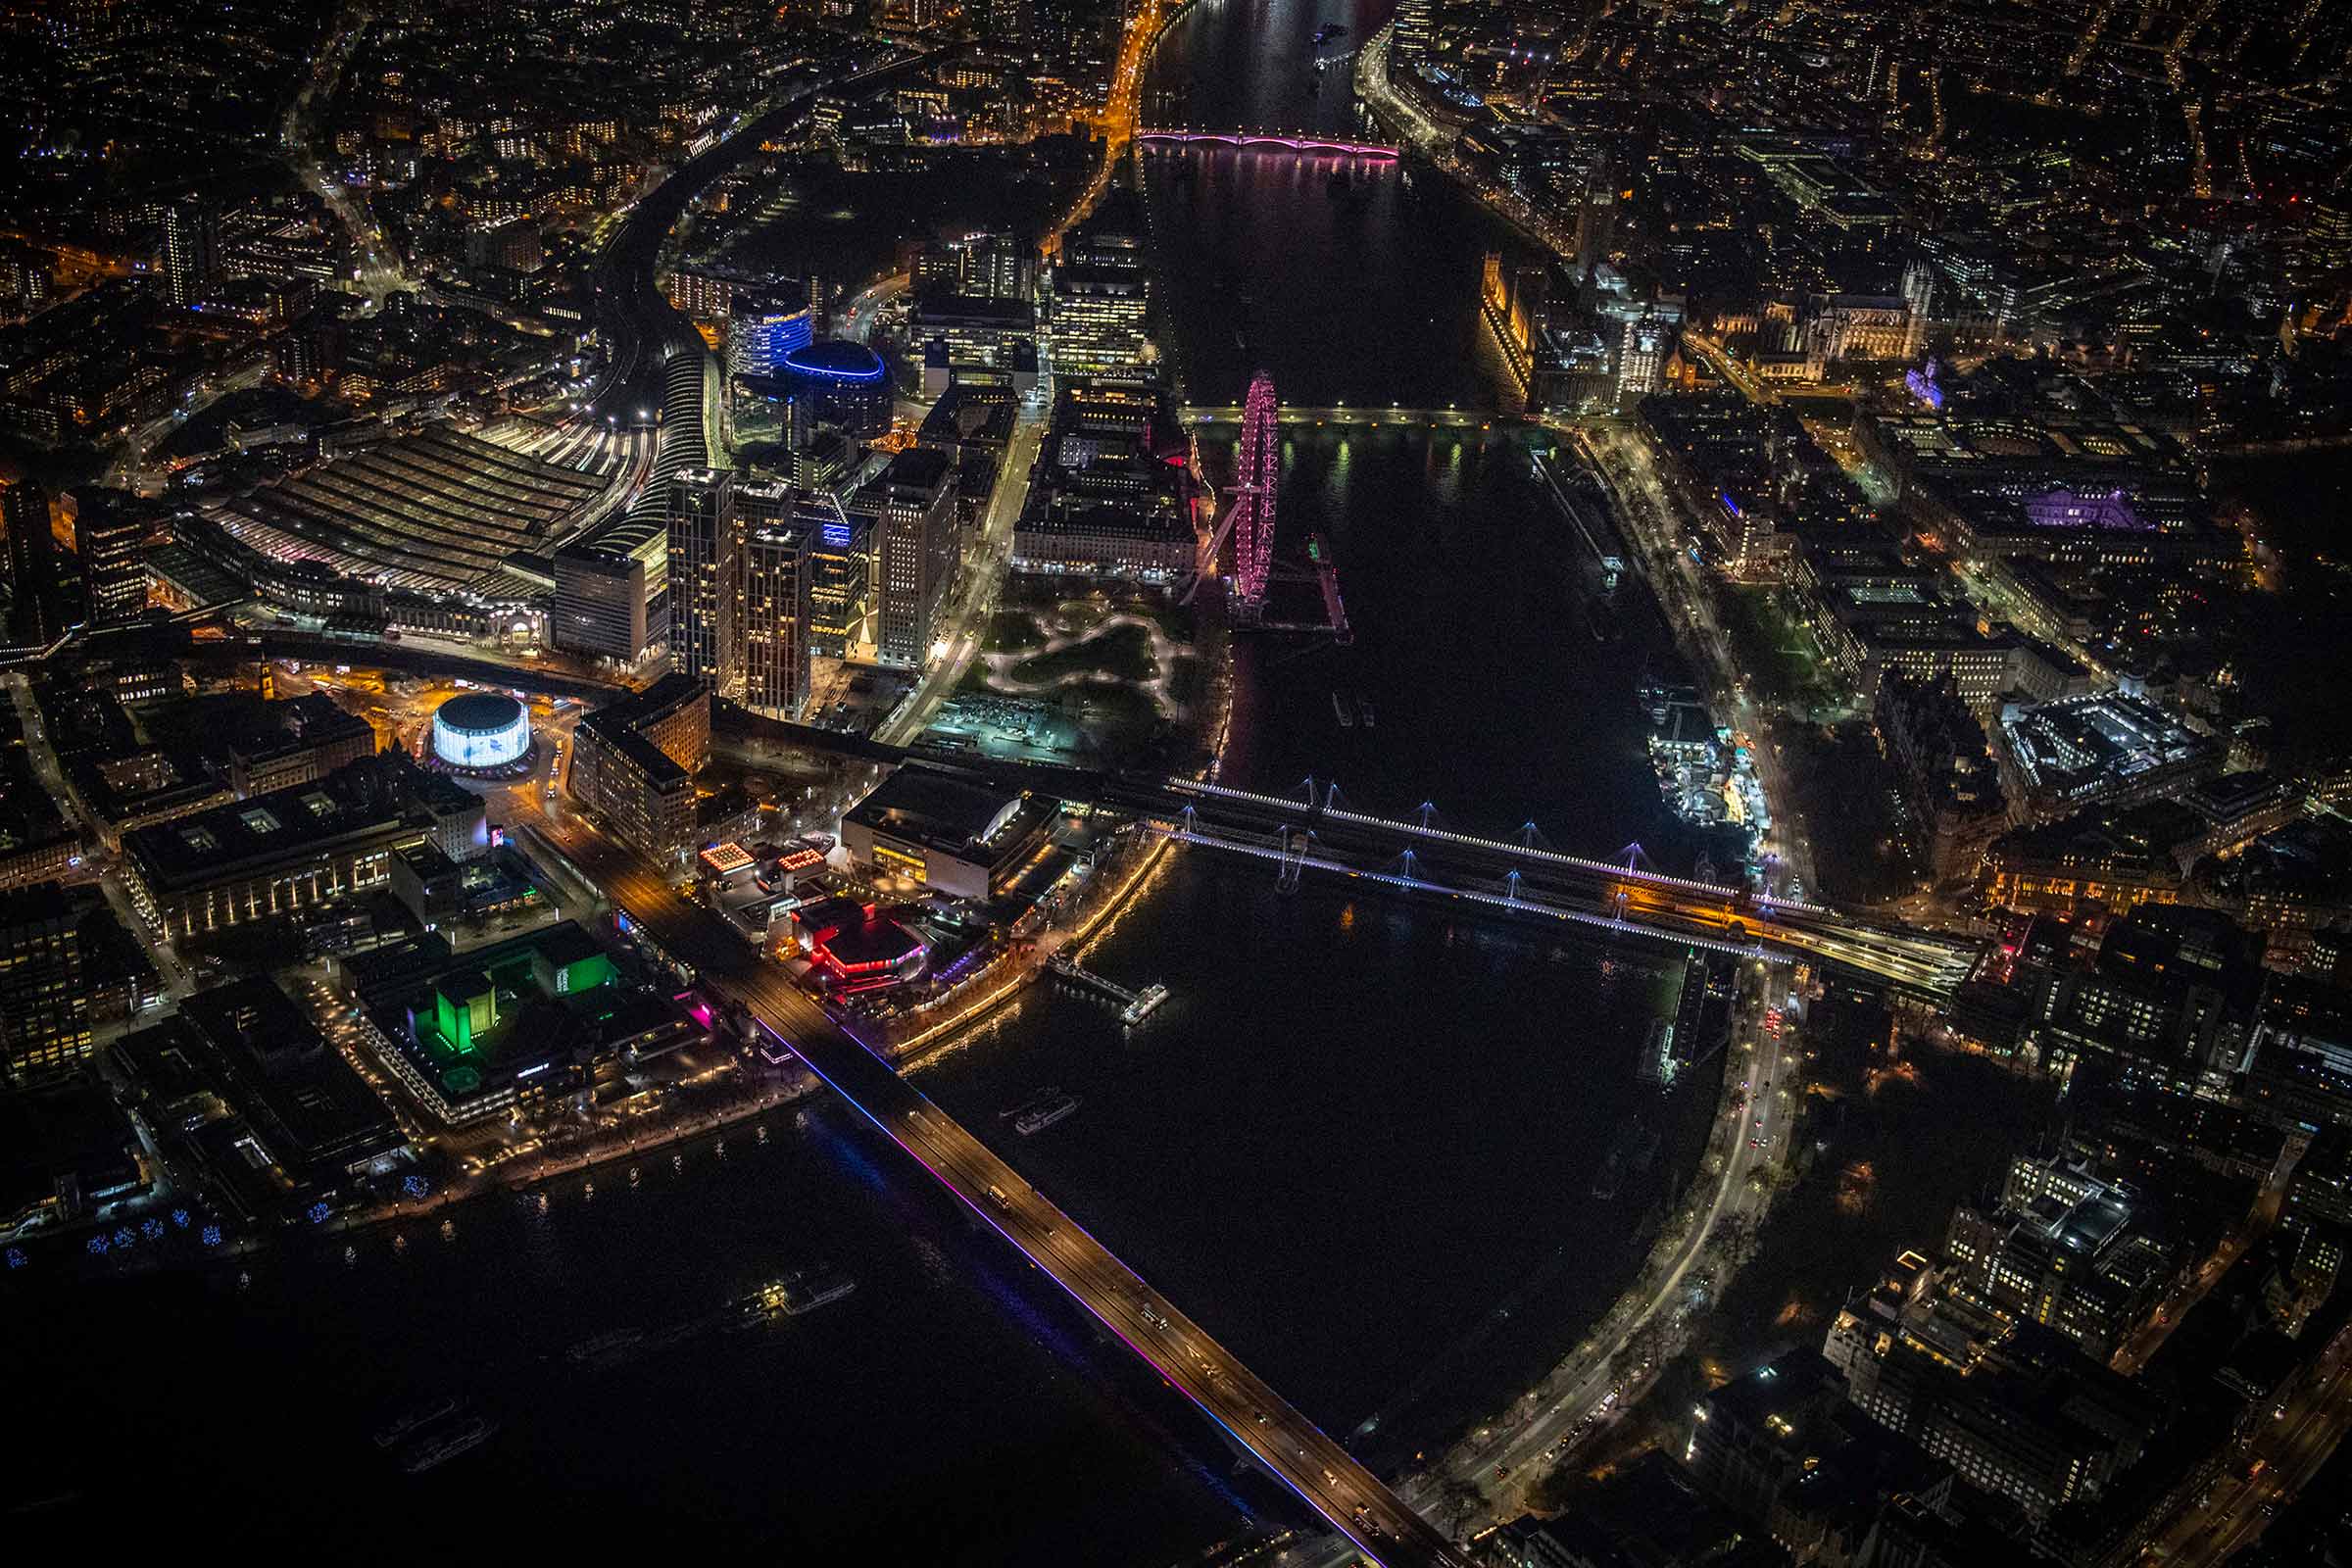 Illuminated River — transforming the Thames